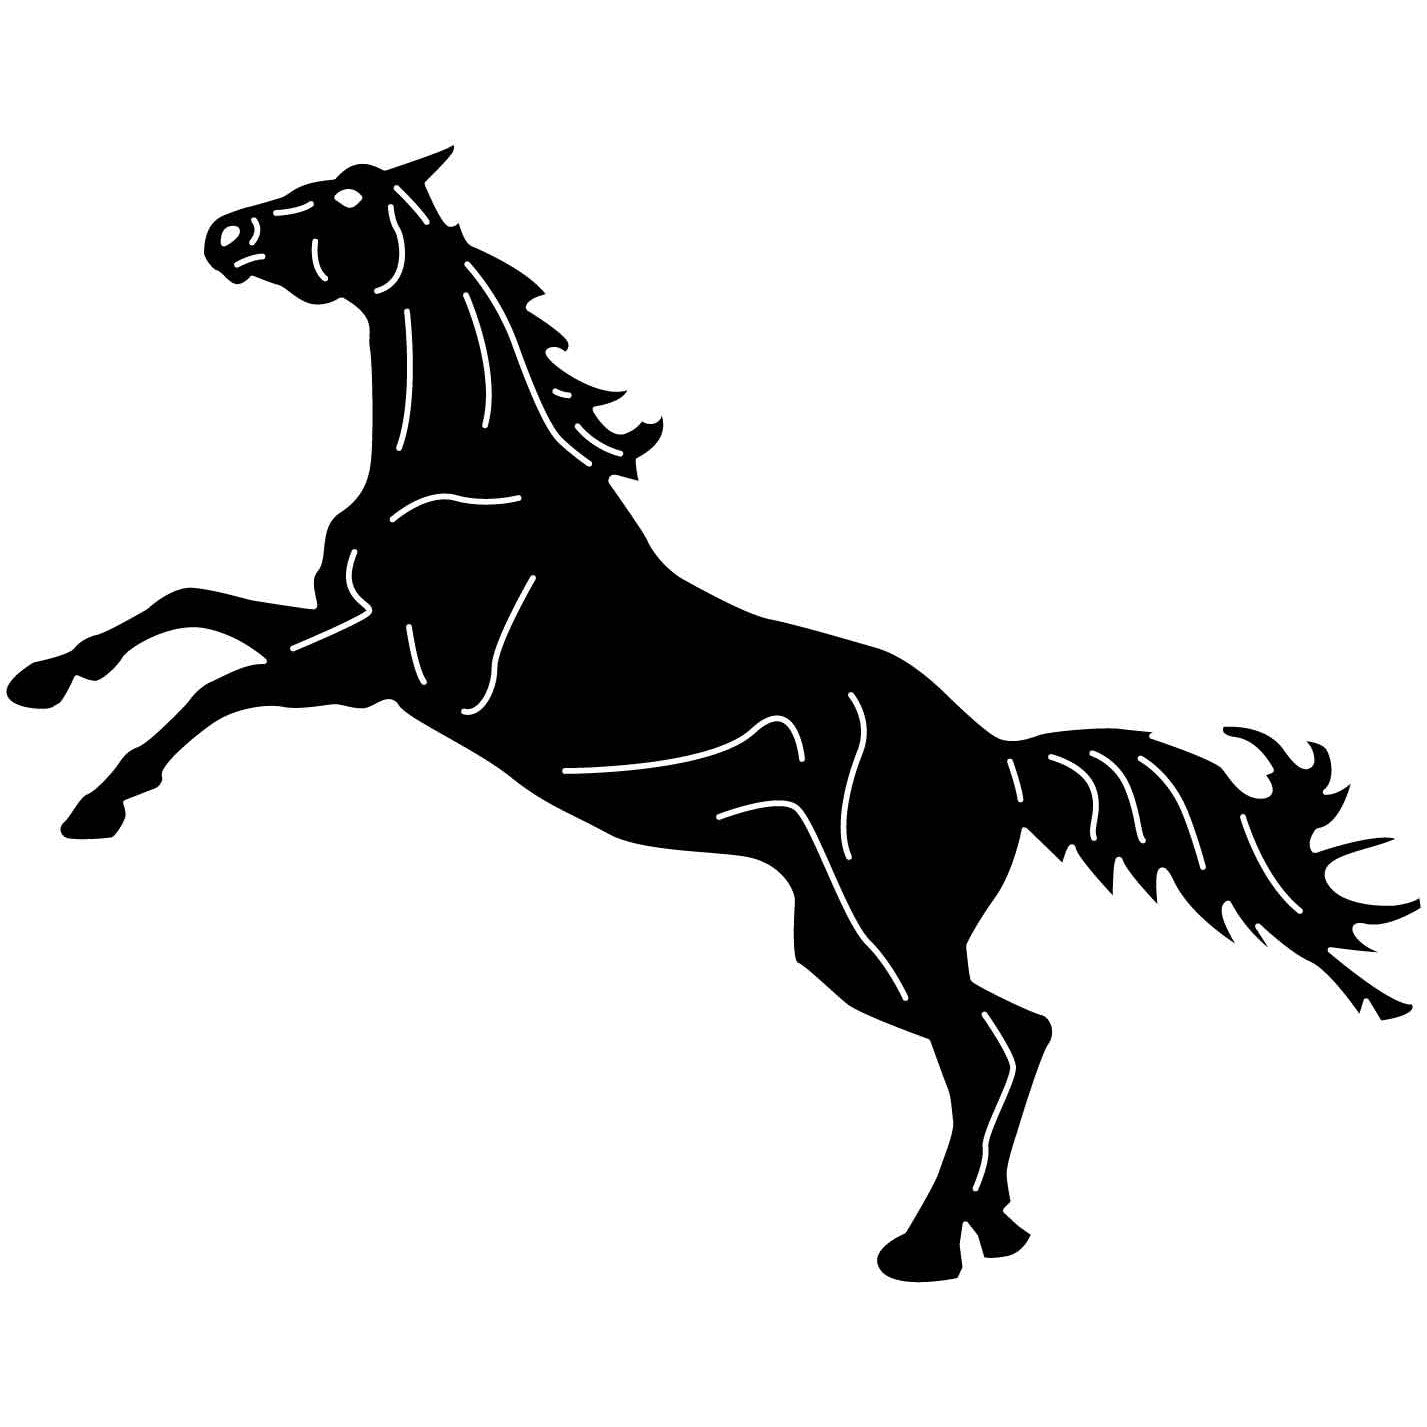 Horses and Cowboys 04